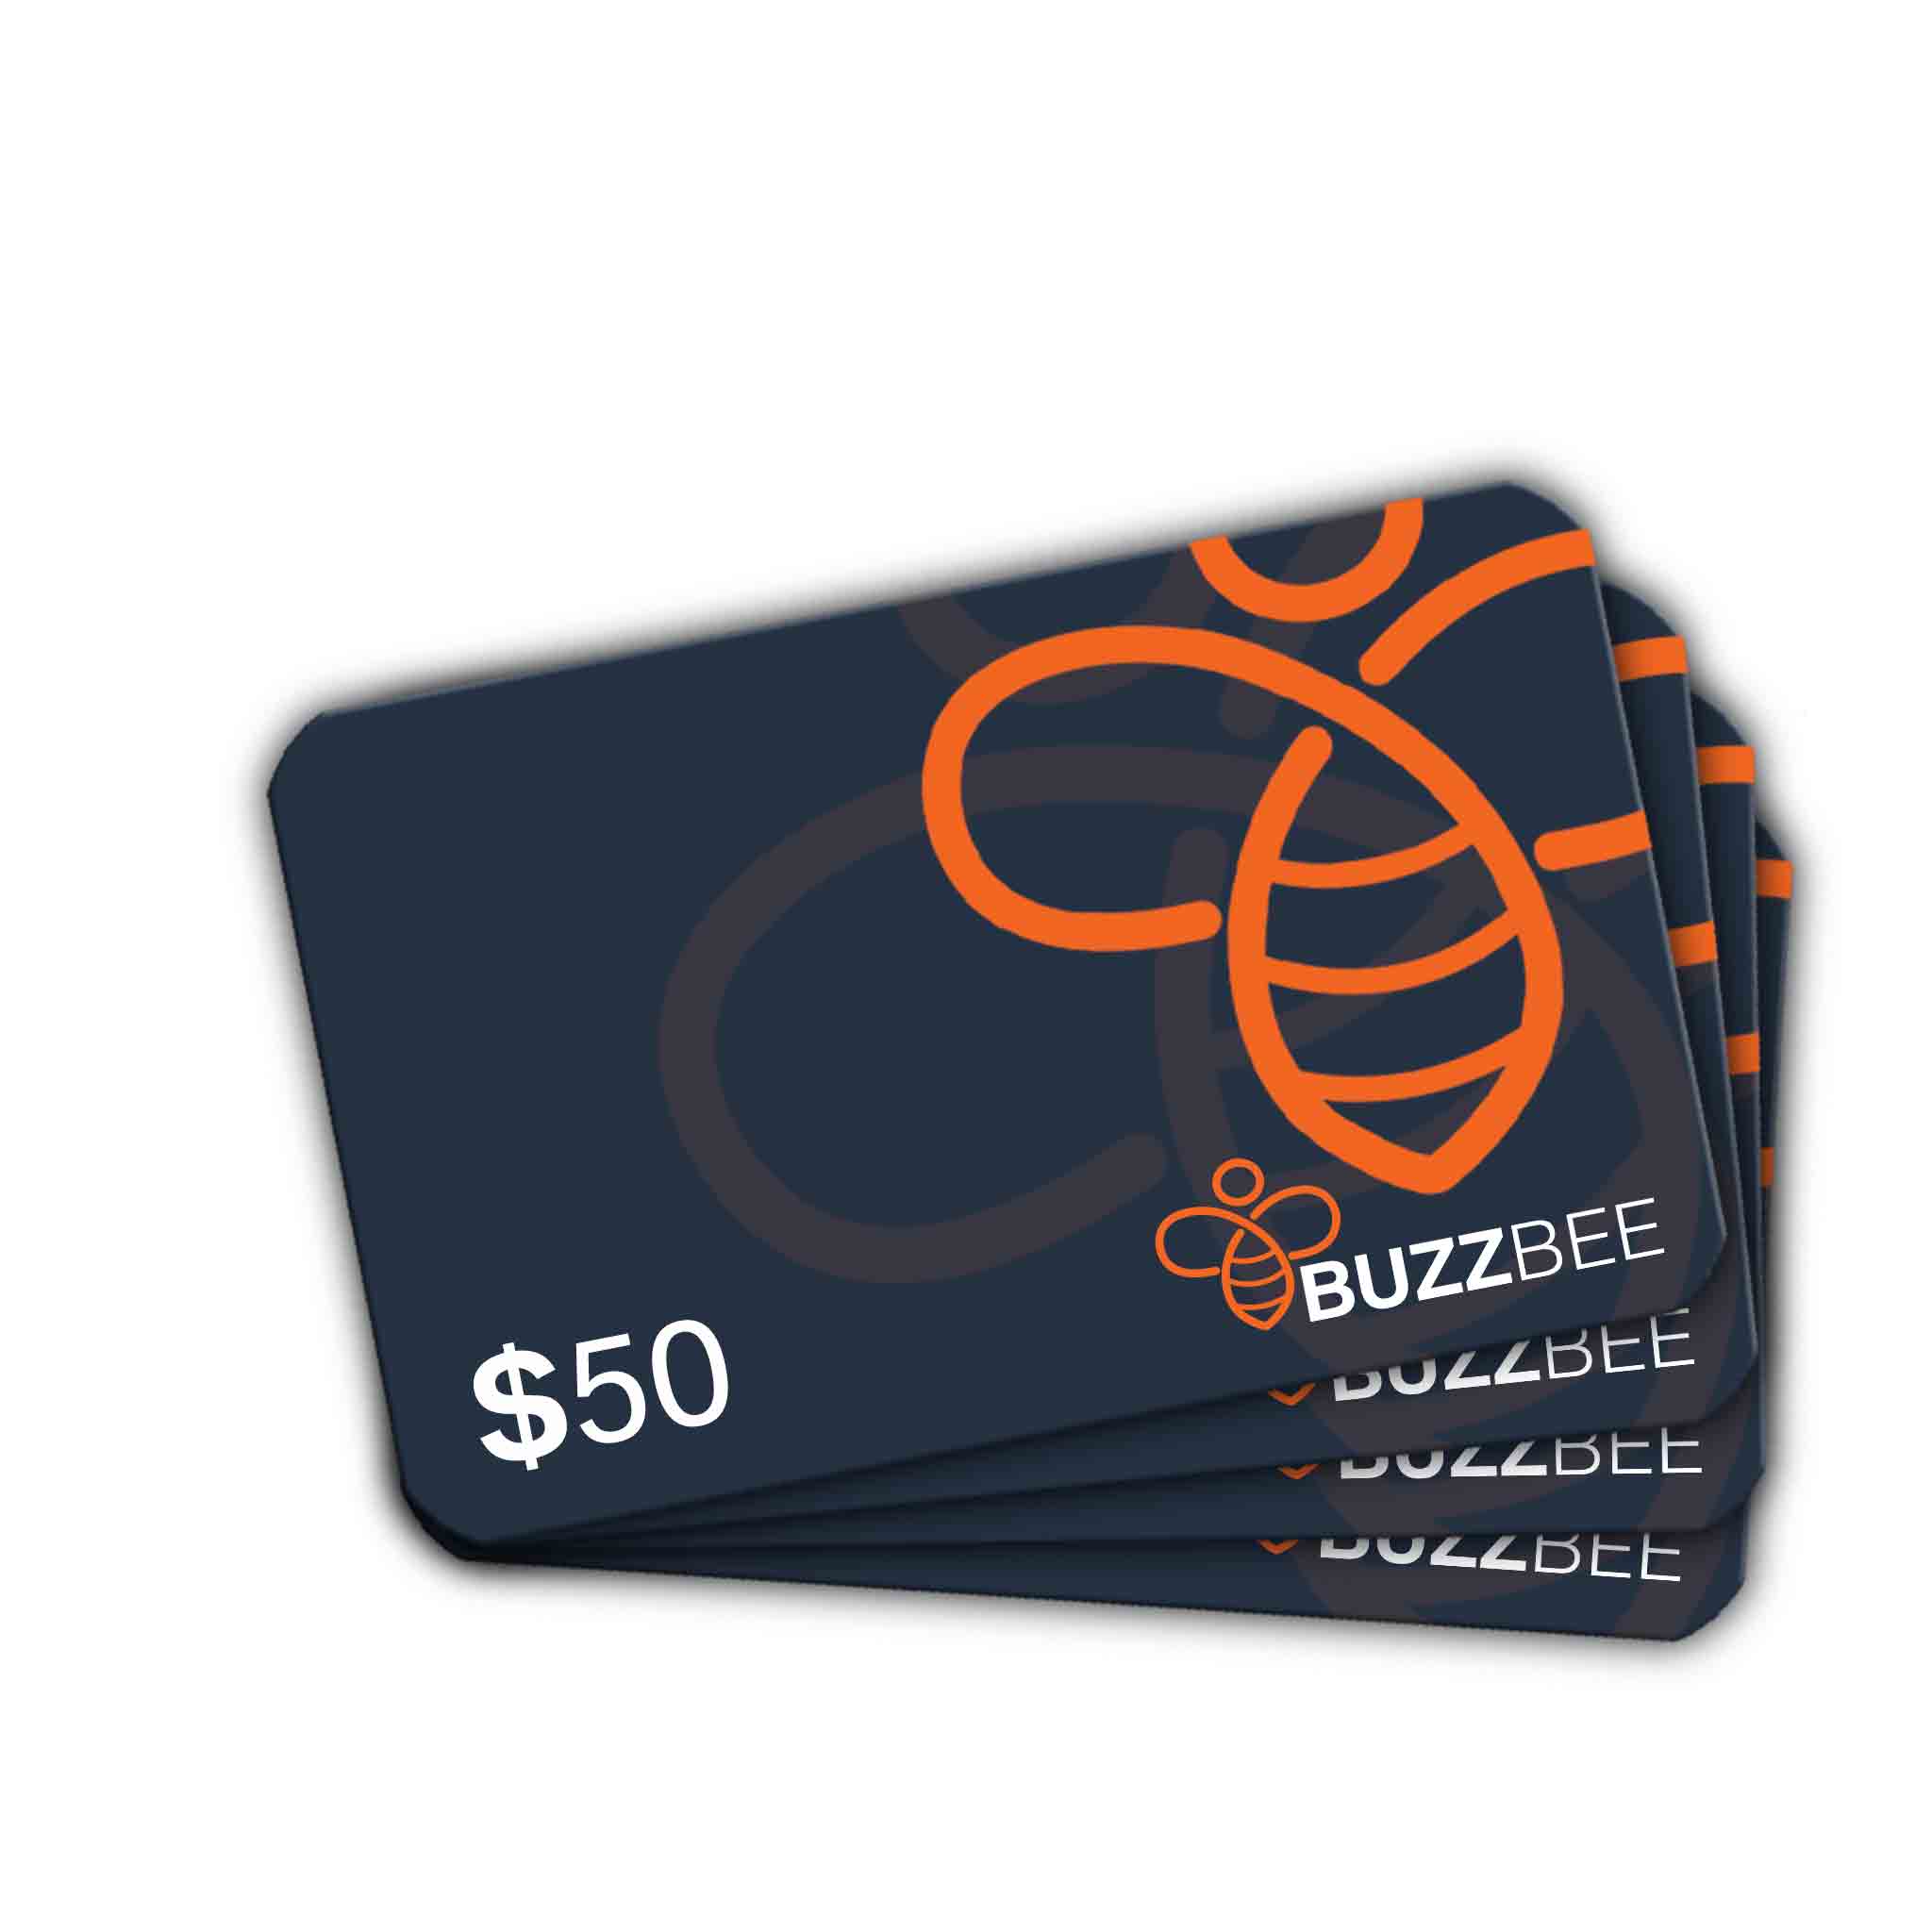 Buzzbee Gift Card - Gift Card collection by Buzzbee Beekeeping Supplies